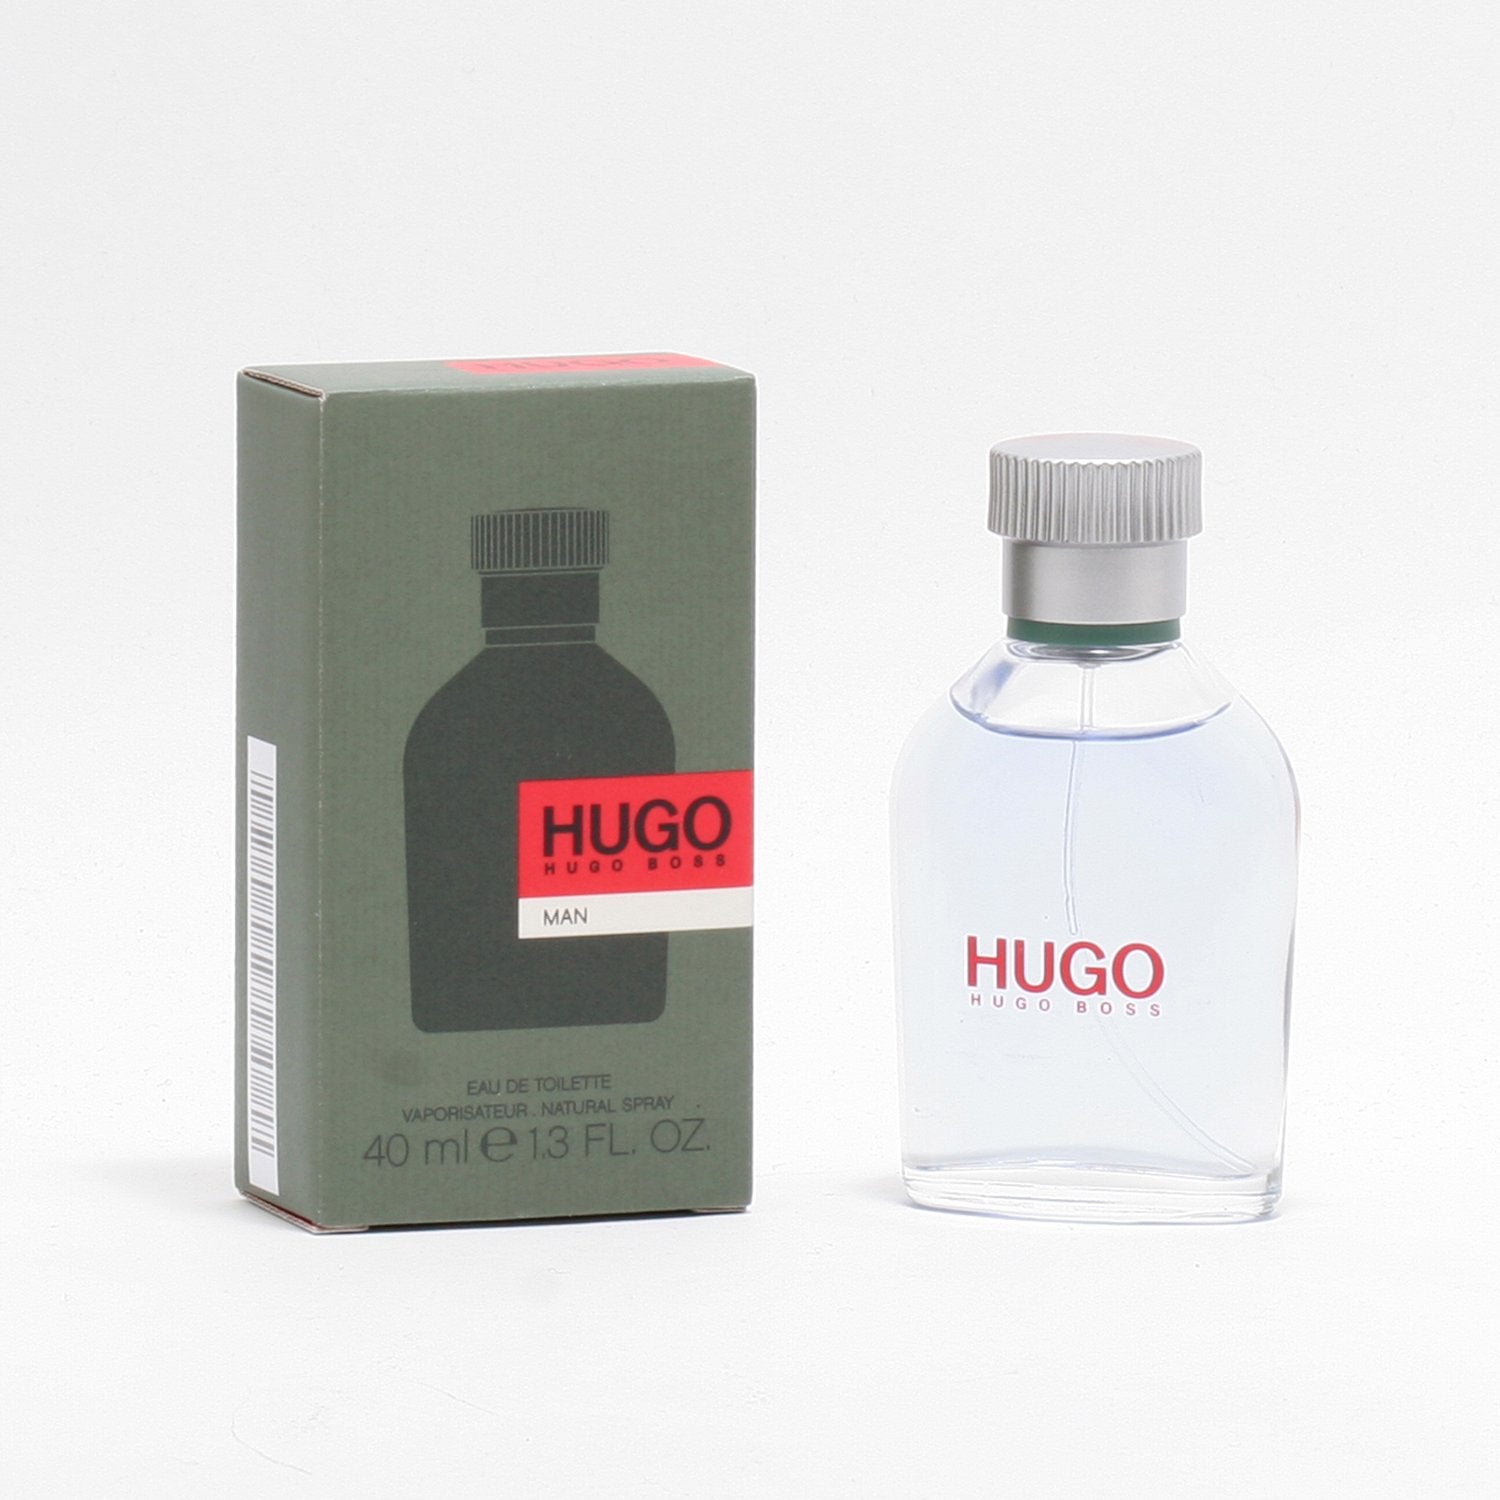 HUGO FOR MEN BY HUGO BOSS - EAU DE TOILETTE SPRAY